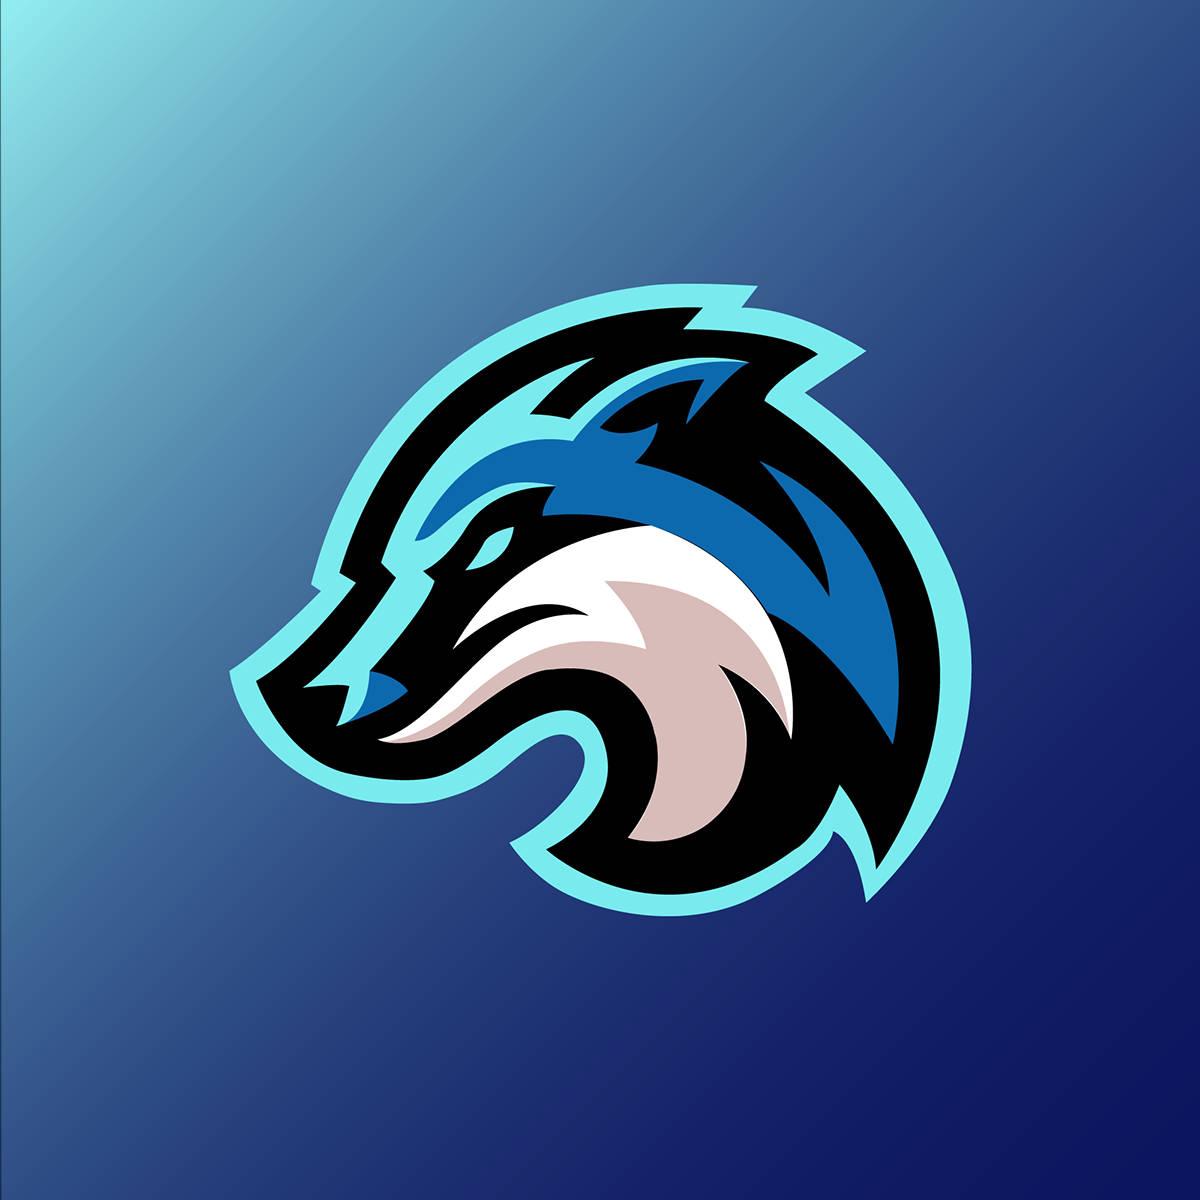 Caption: Stunning Blue Wolf Digital Logo Background